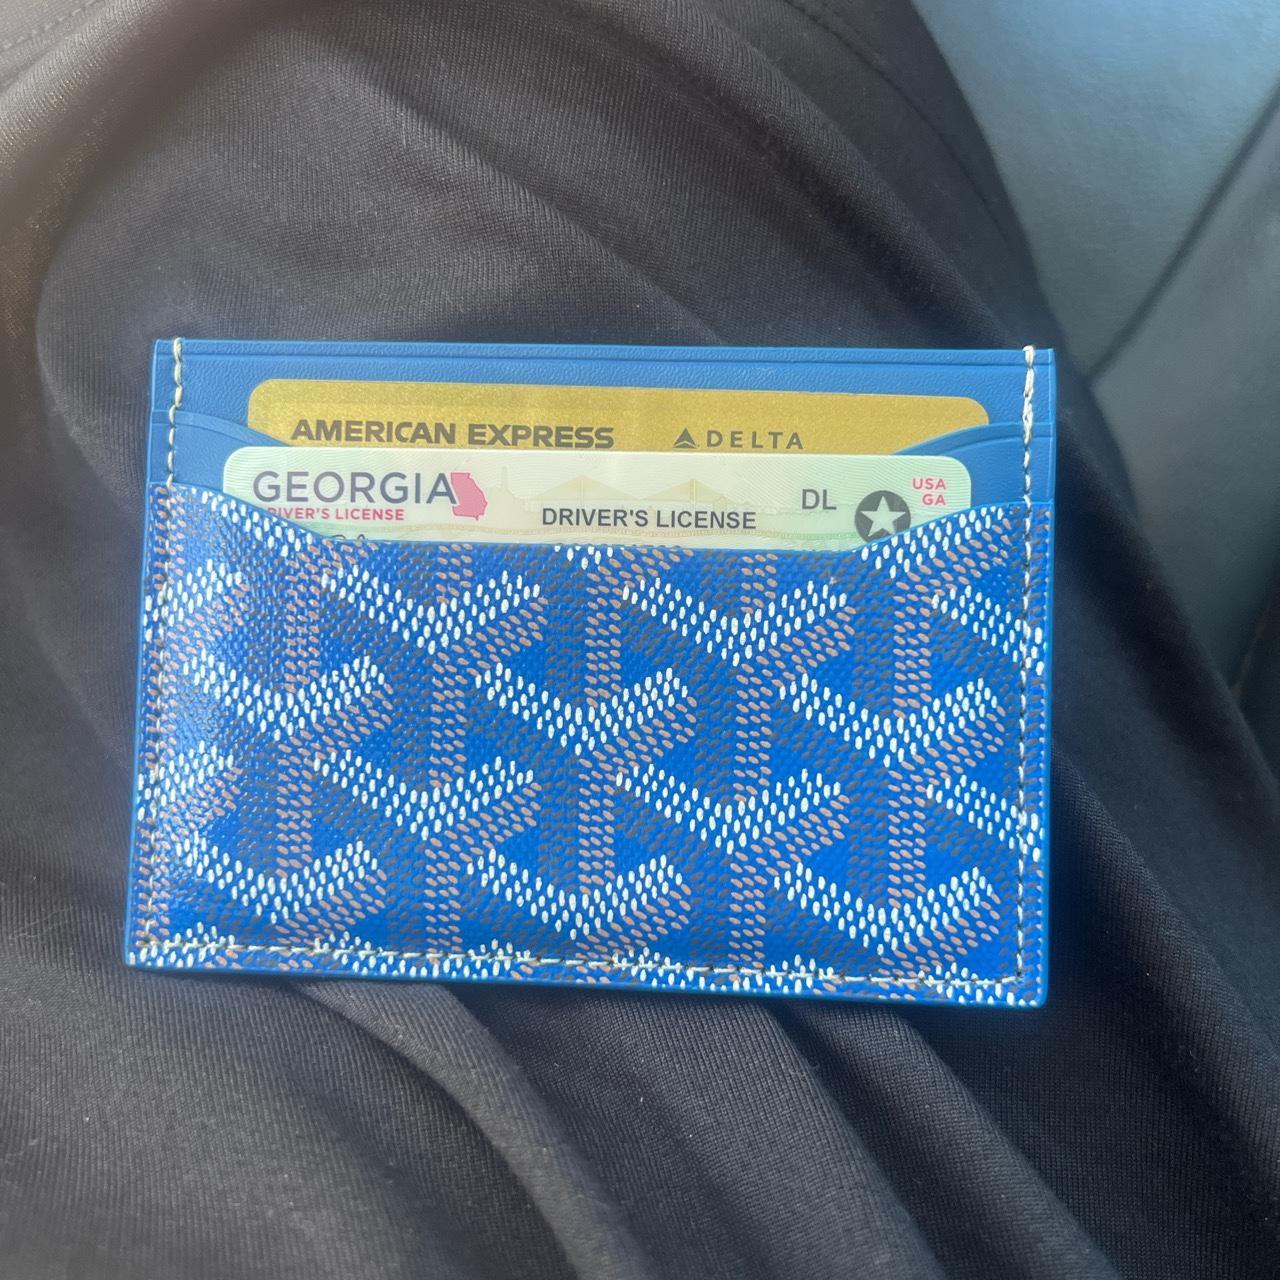 blue goyard wallet